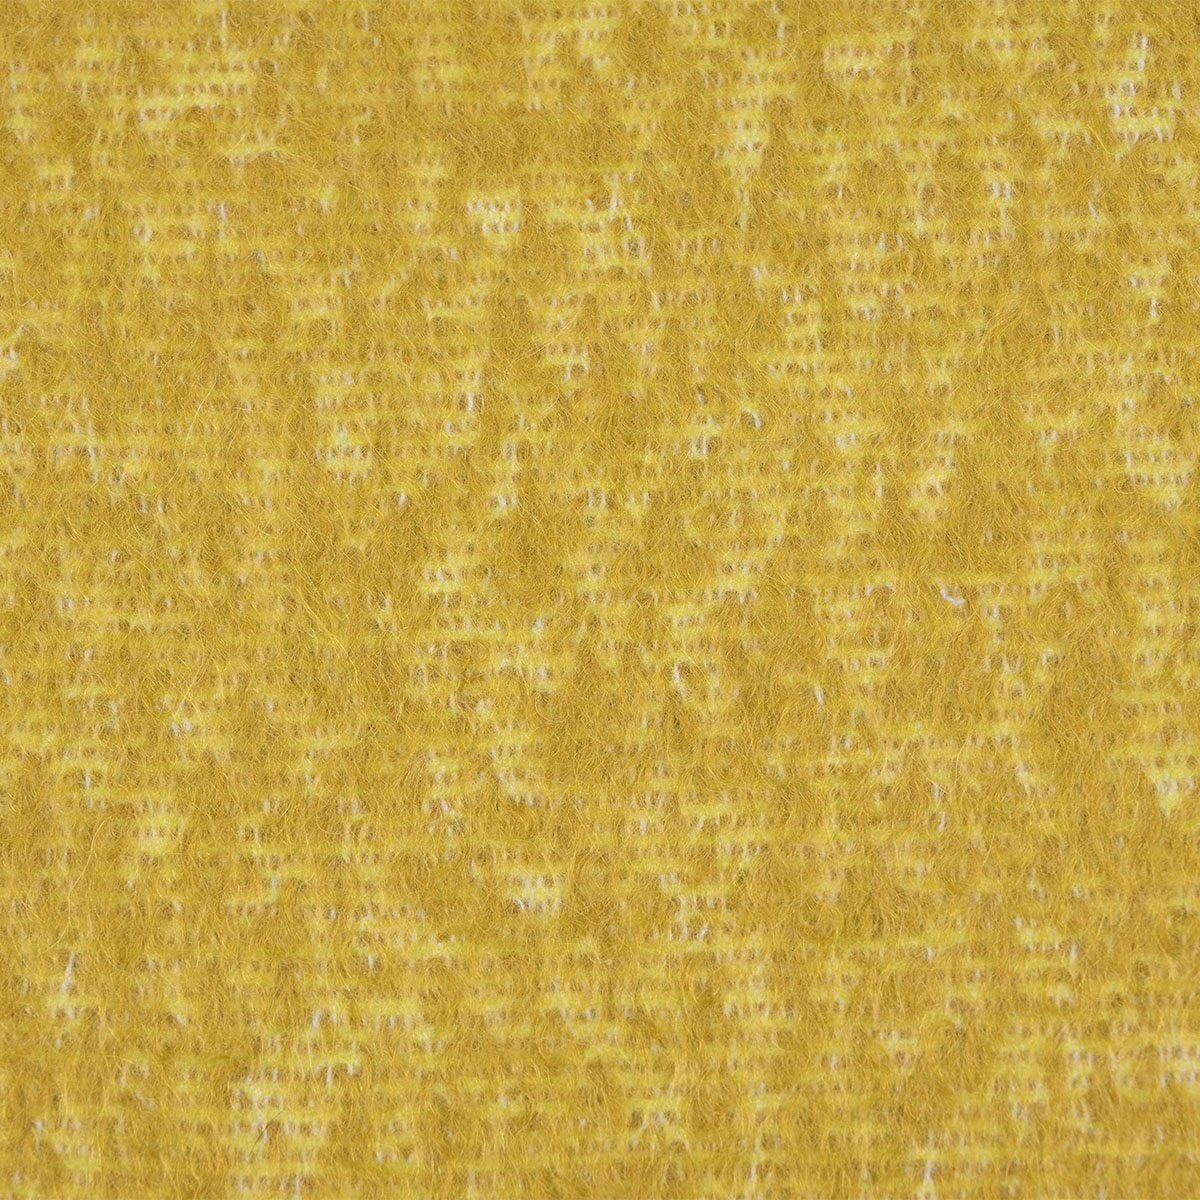 Yellow Mohair Coating Fabric 96431